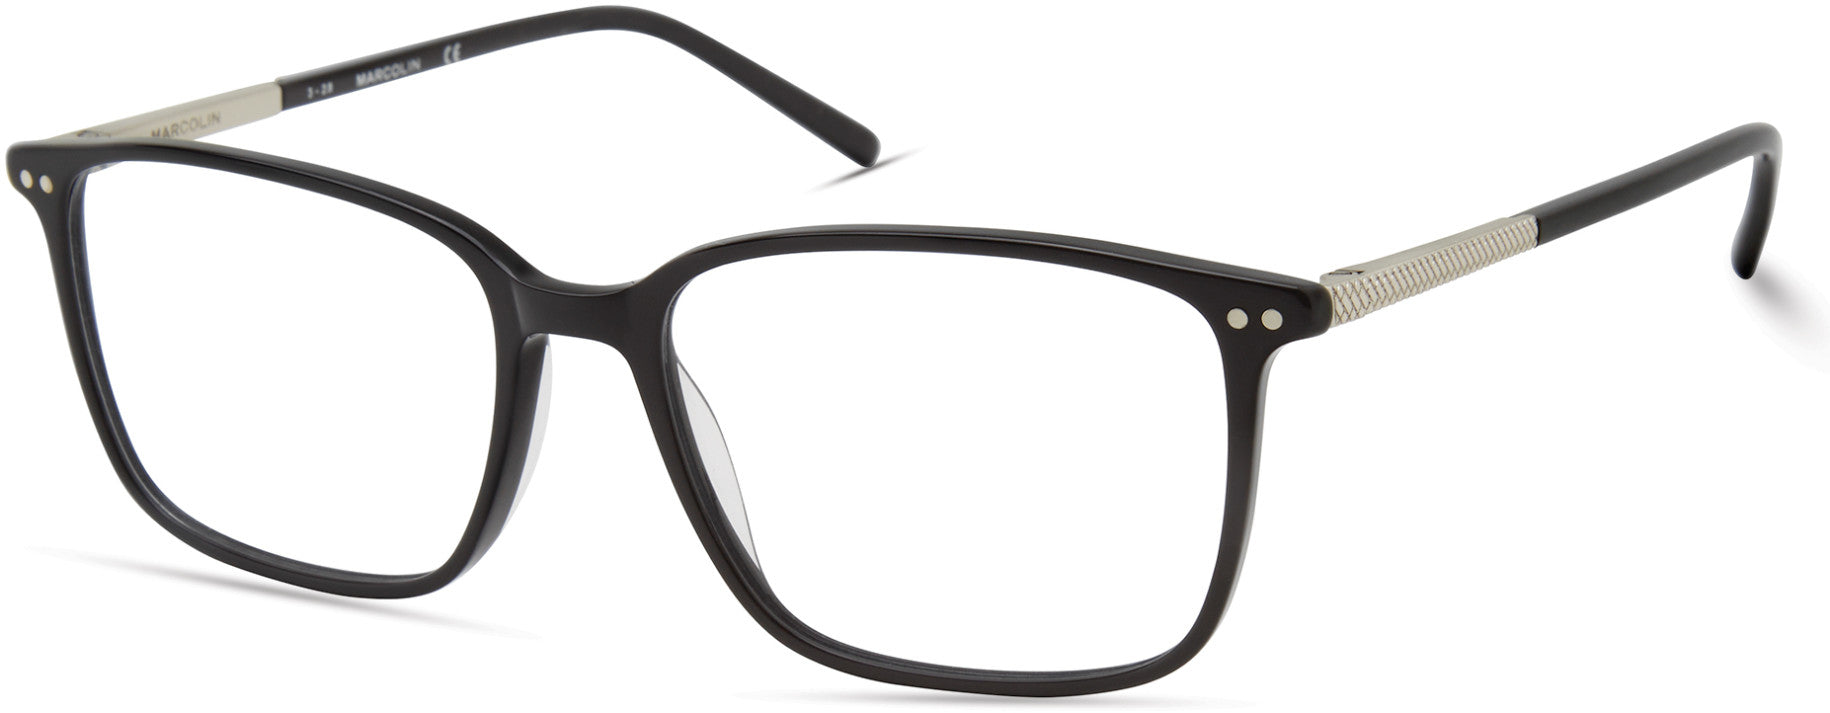 Marcolin MA3020 Square Eyeglasses 001-001 - Shiny Black